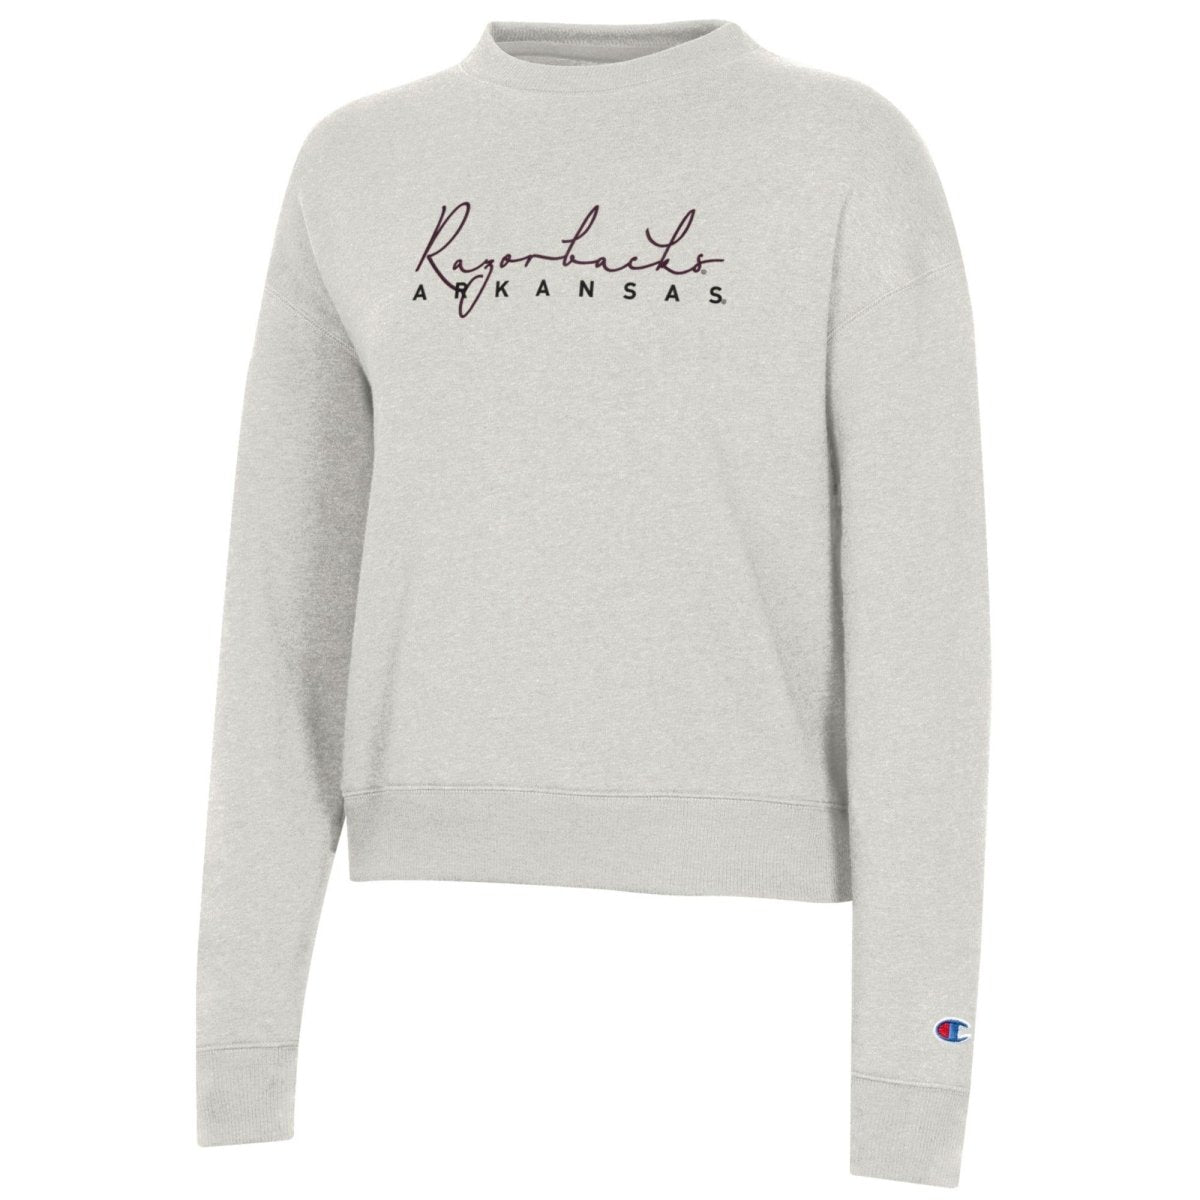 University of Arkansas Team Embroidered Sweatshirt - Shop B-Unlimited